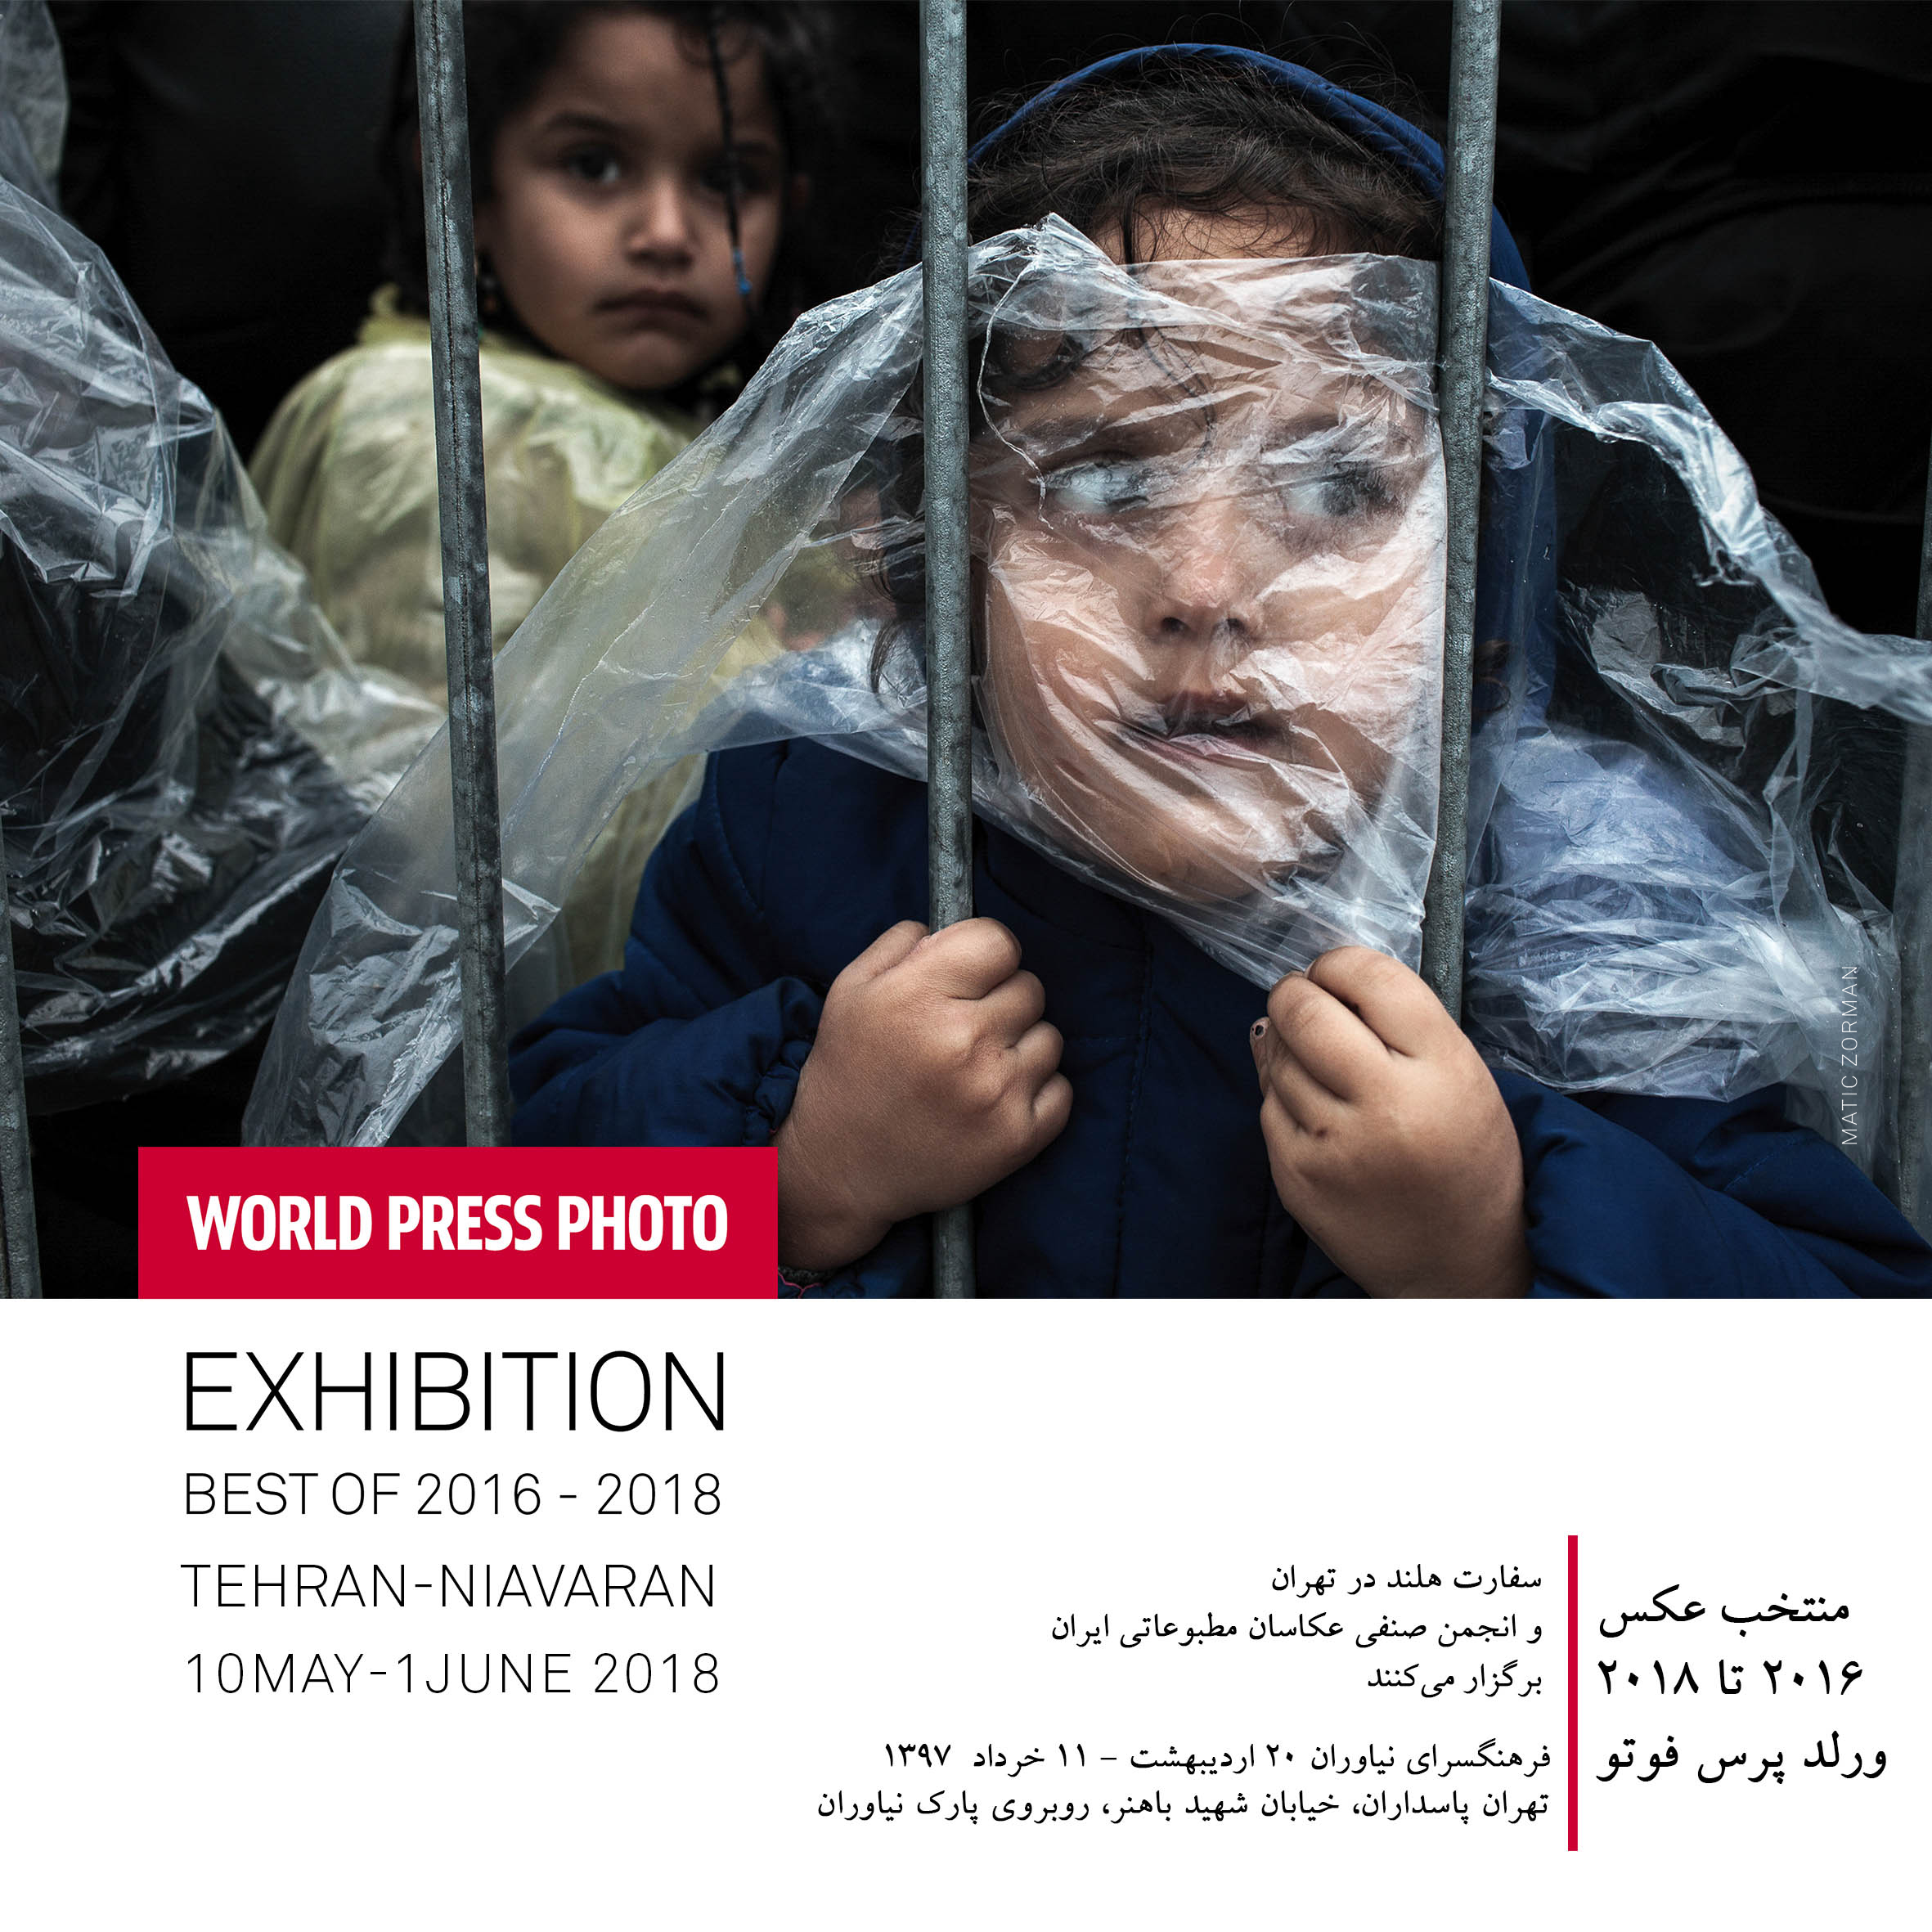 the-world-press-photo-exhibition-comes-to-tehran